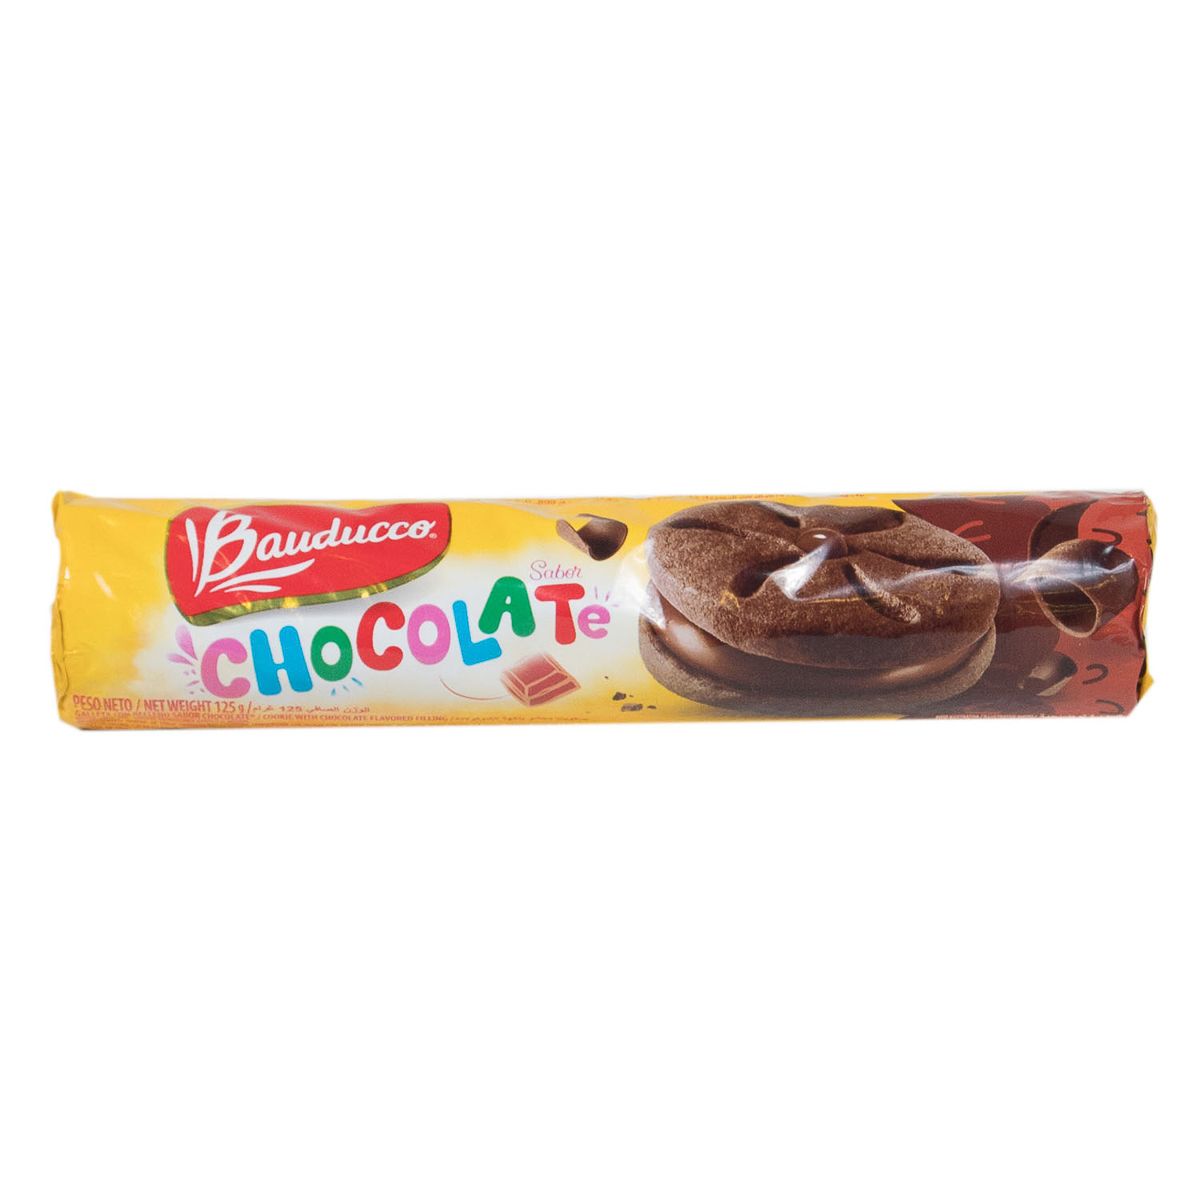 Bauducco Chocolate Cream Biscuit (125g)